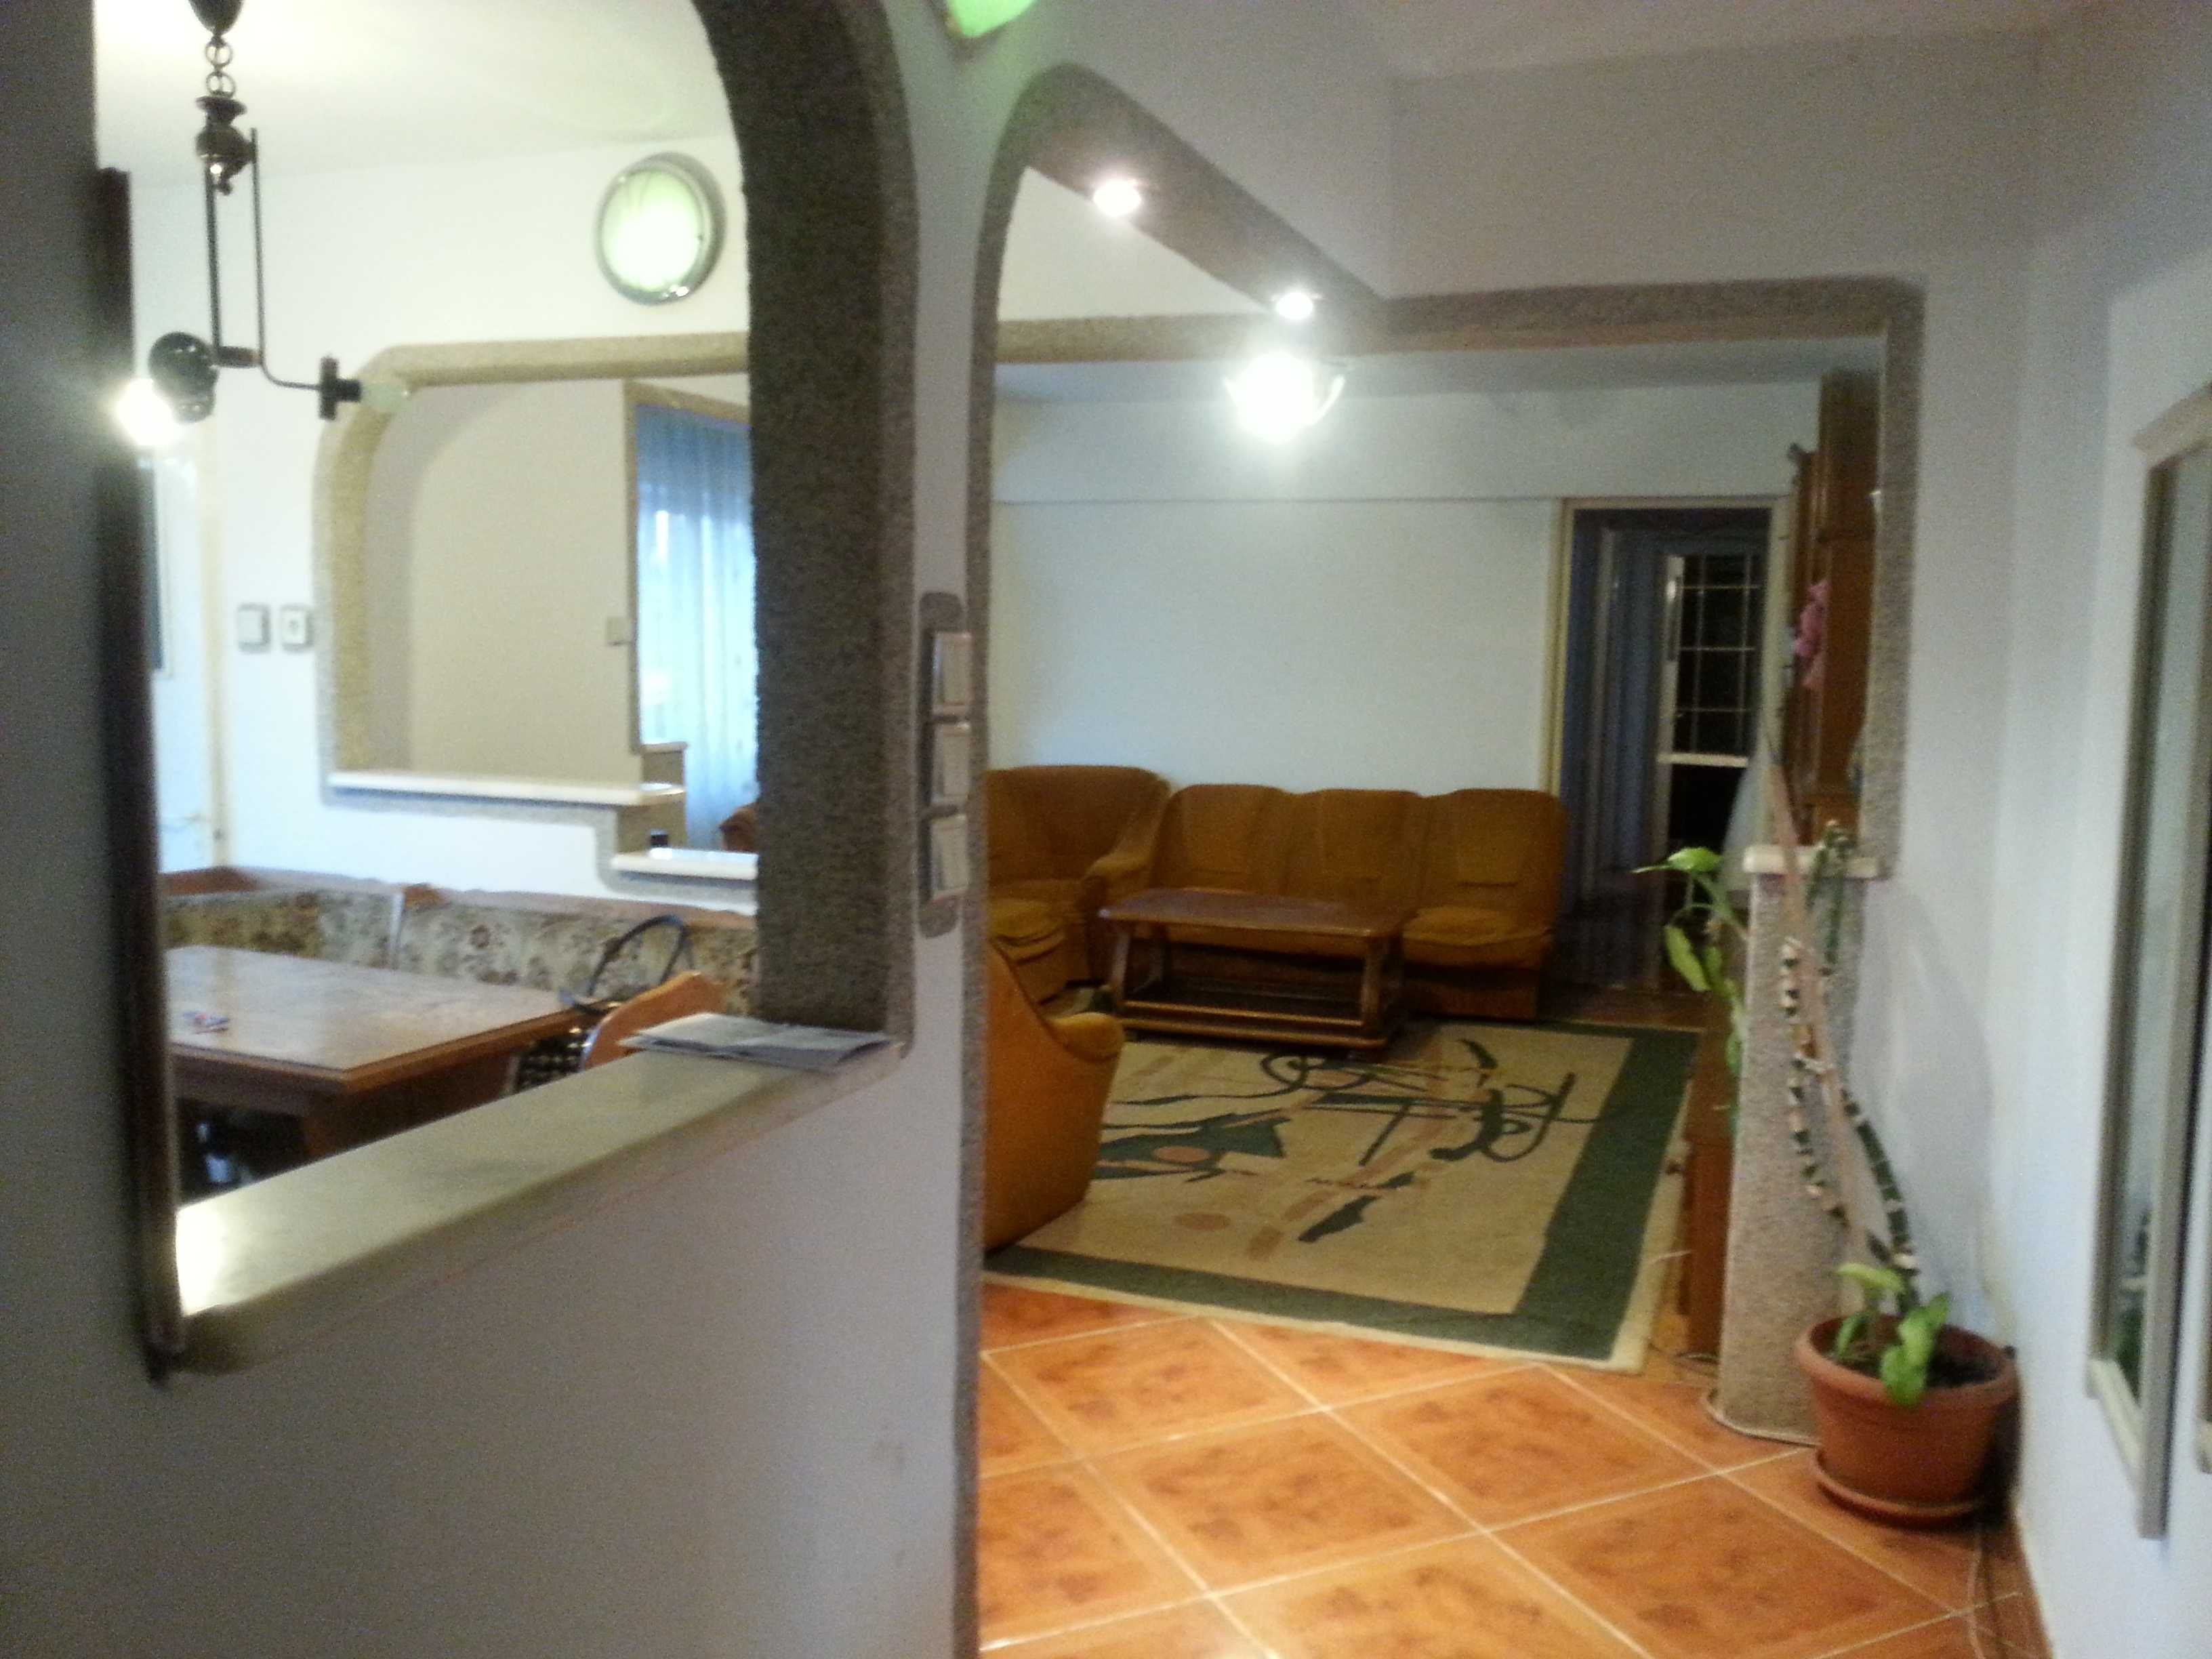 Închiriez apartament 3 camere,Satu Mare,Bulevardul Traian,etaj IV.